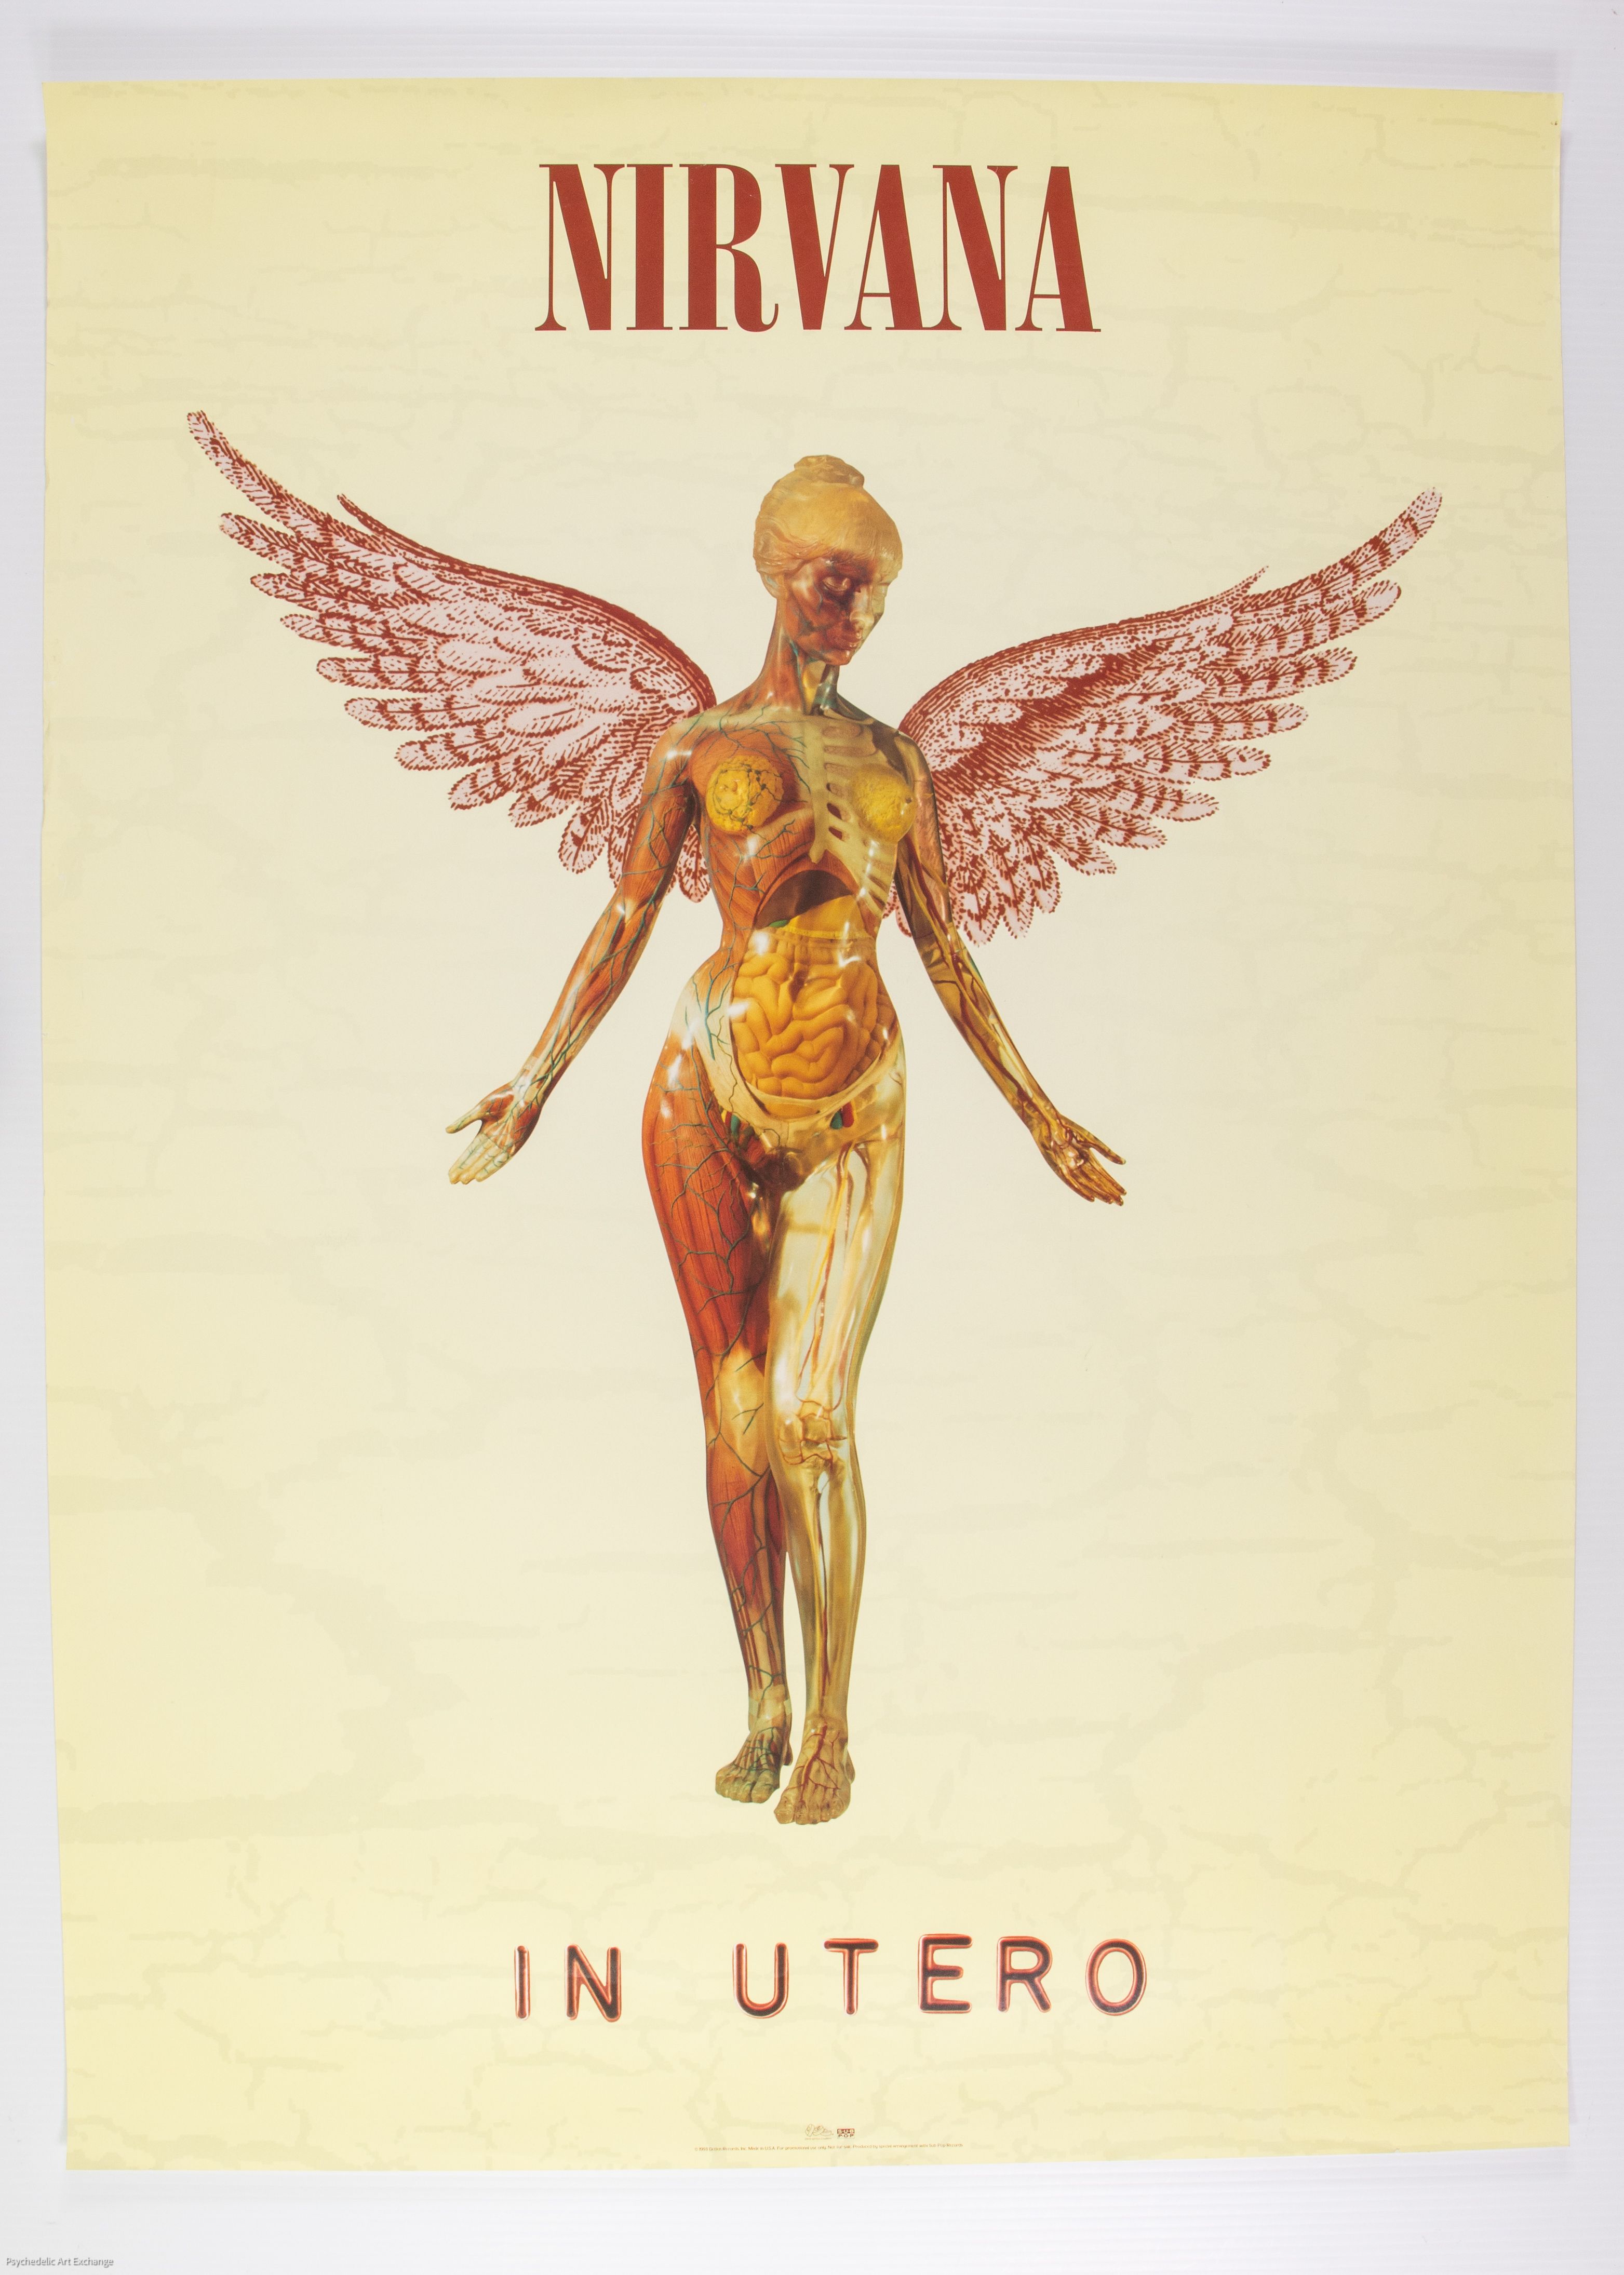 Nirvana Geffen Records "In Utero" Promotional Poster 1993 Concert Poster